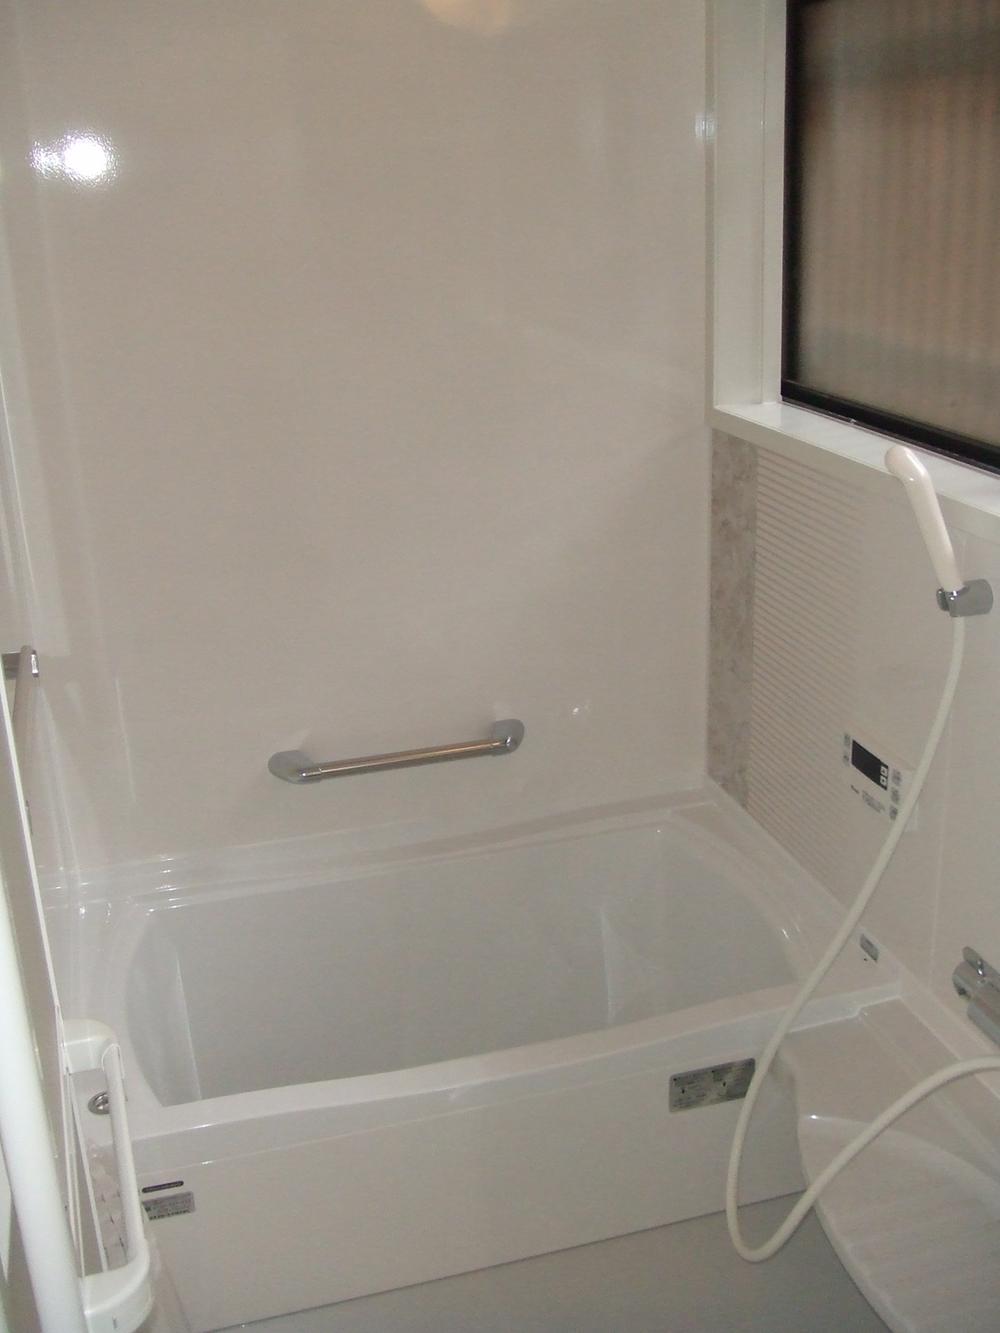 Bathroom. System bus with bathroom drying heating